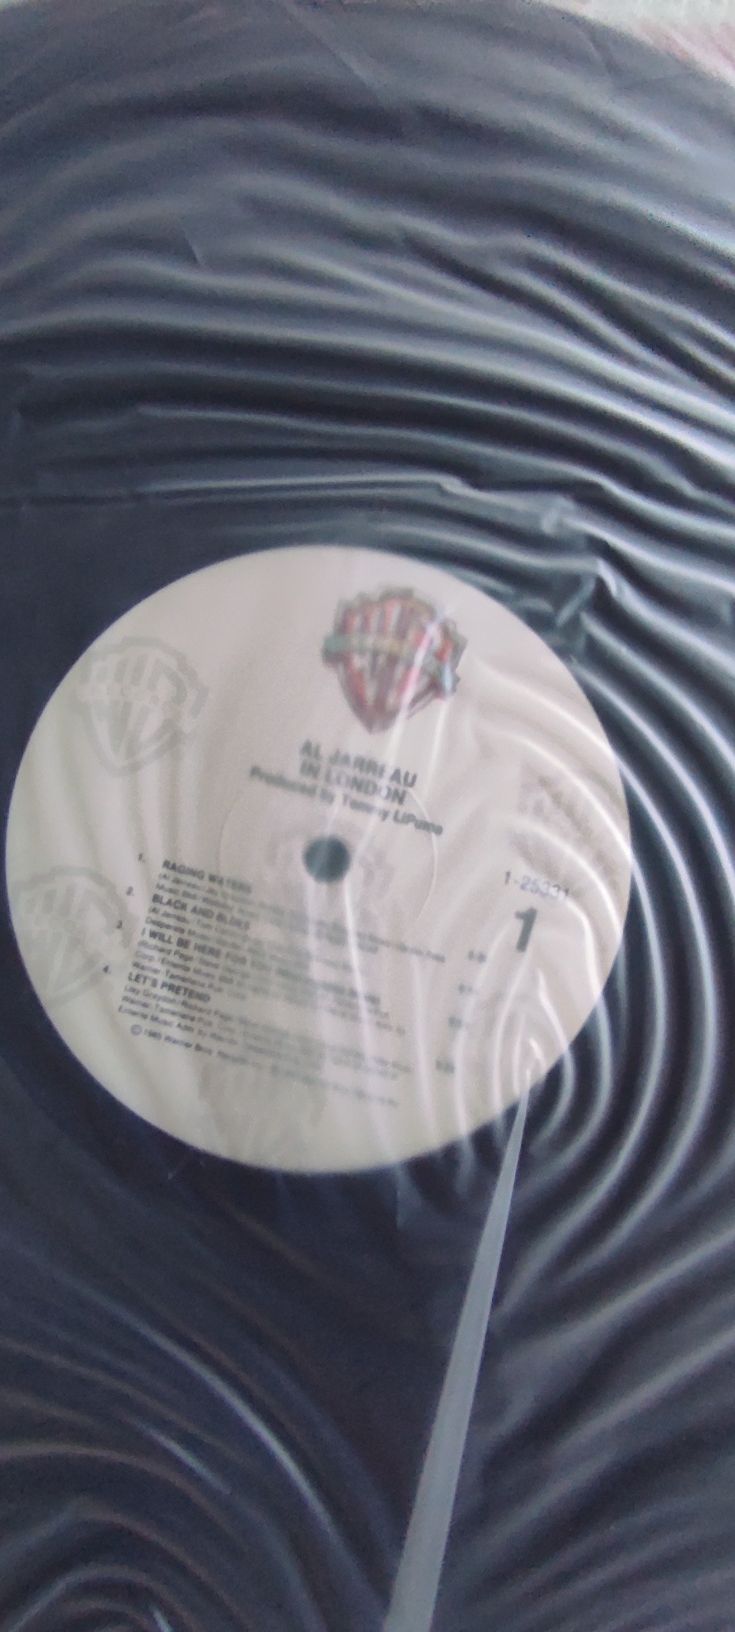 Płyta winylowa/Al Jarreau -in London/1985r.